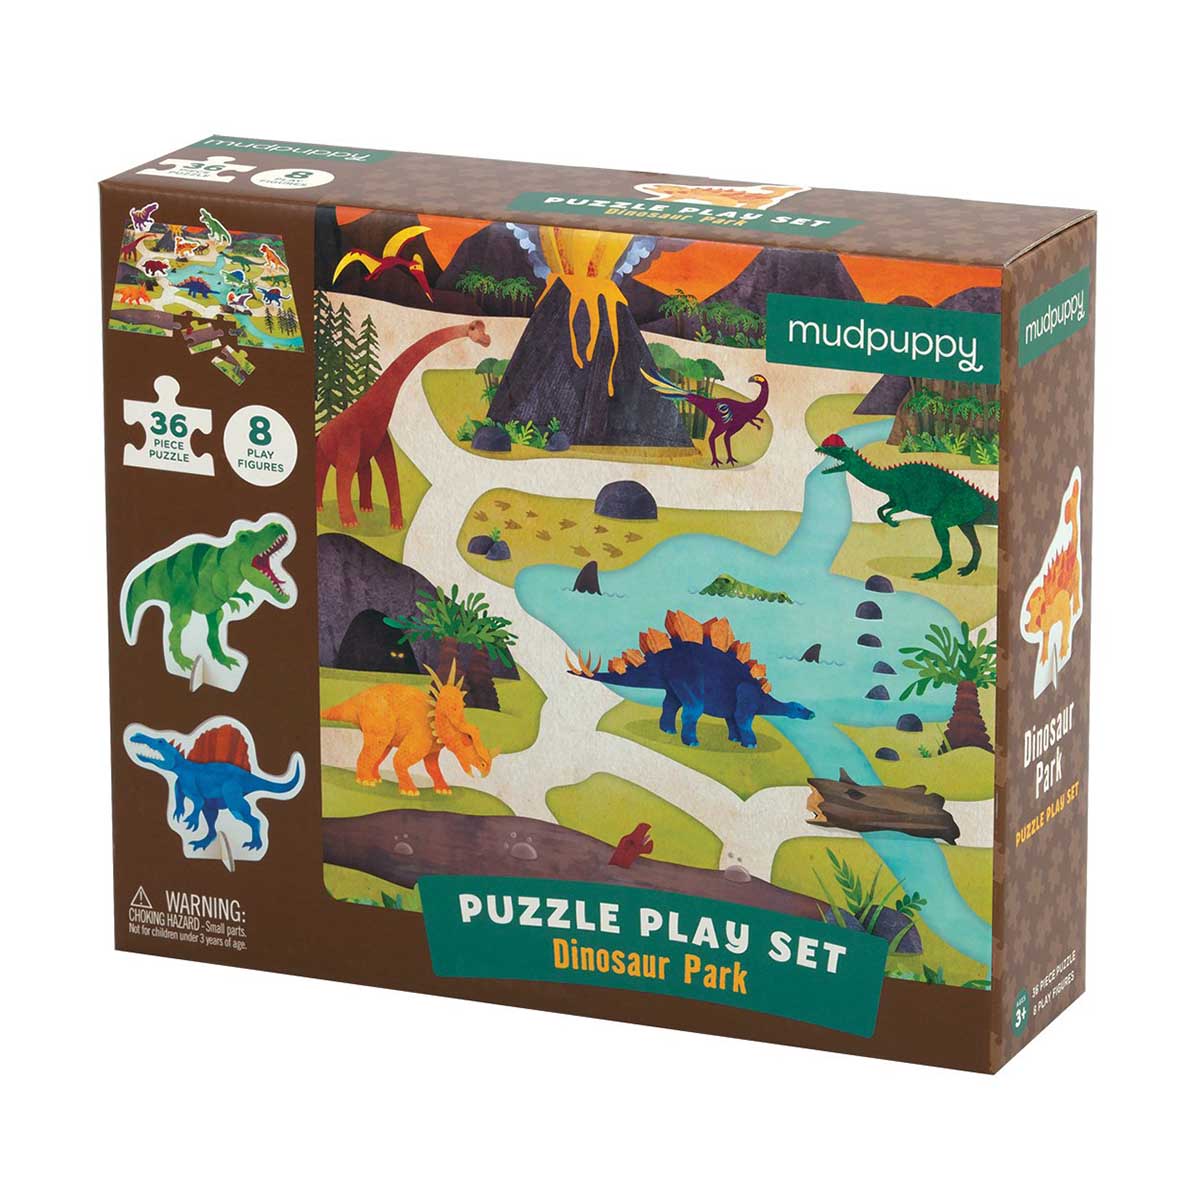 Dinosaur Park Puzzle Play Set